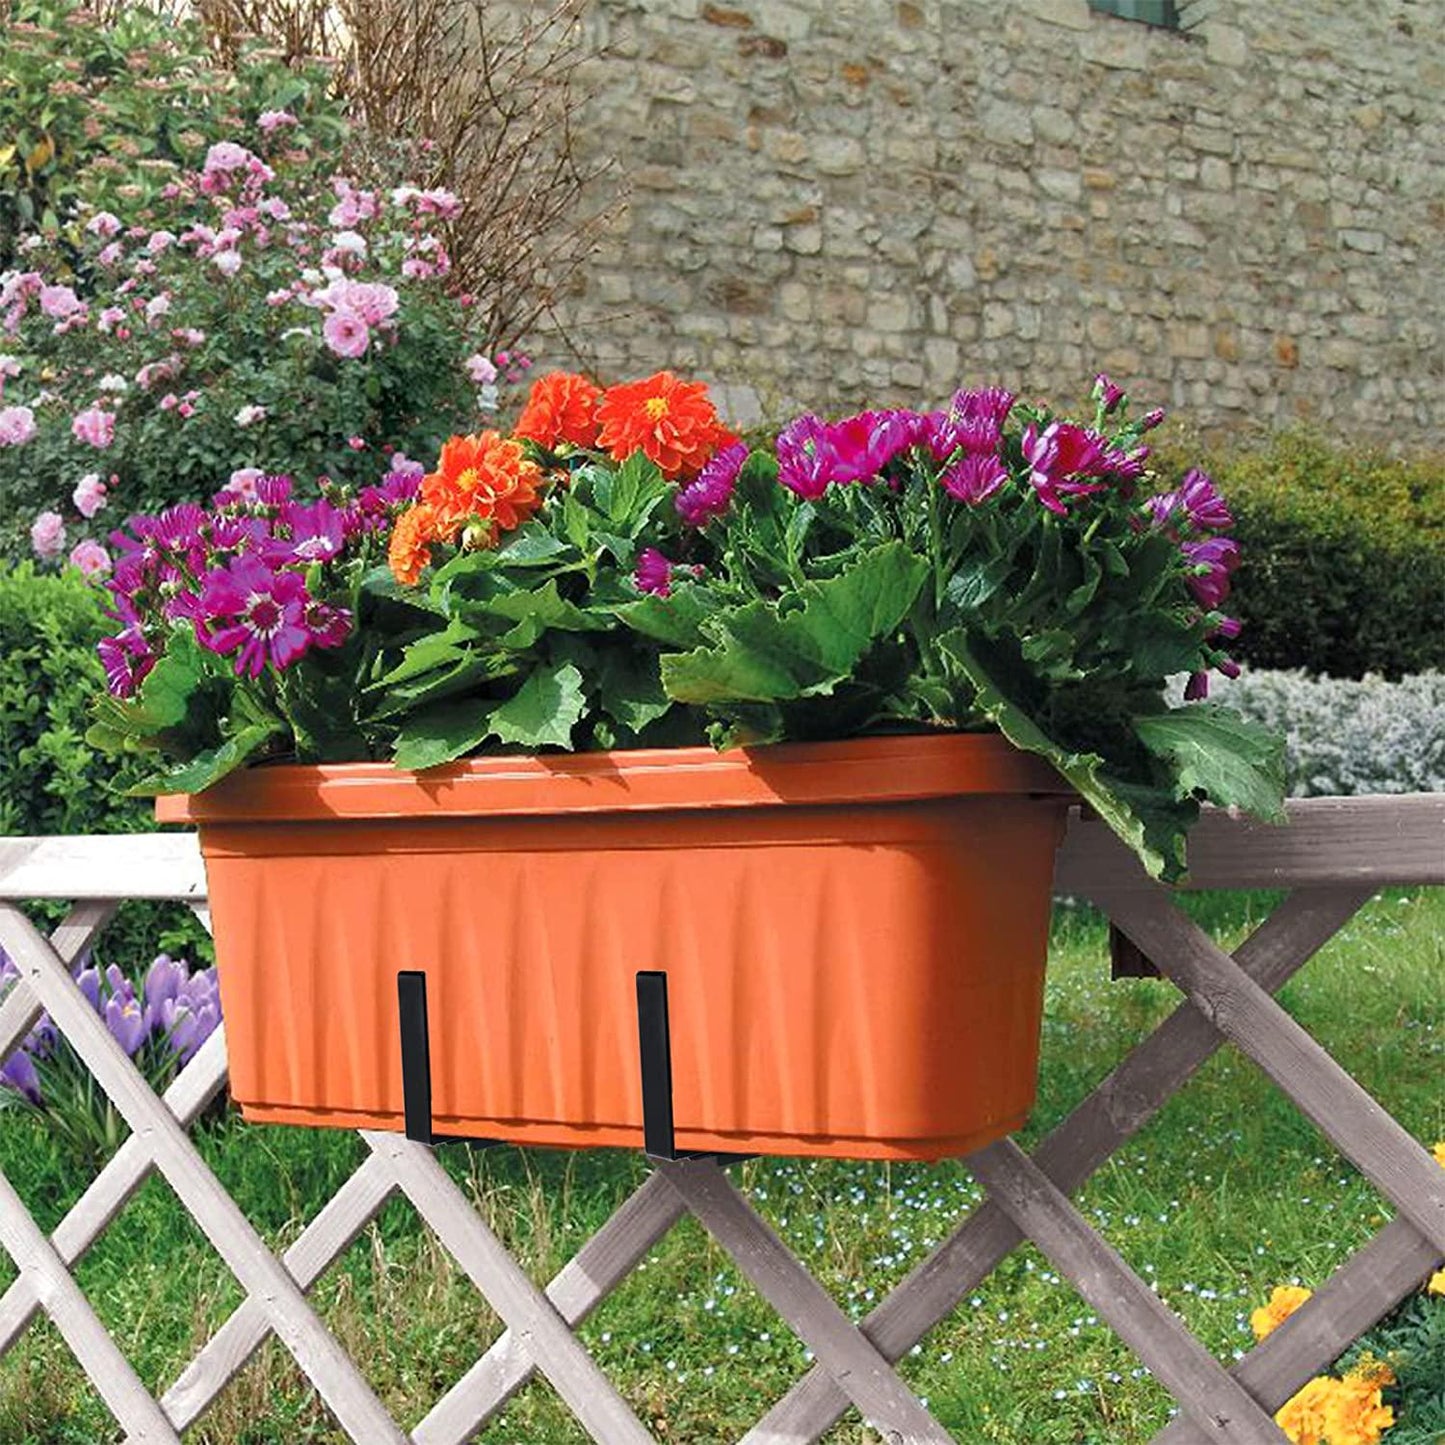 SanSanYa Window Box Planter Brackets Adjustable Planter Box Bracket (5.92 to 13 ) for Window Box Flower Plant (6, Black)